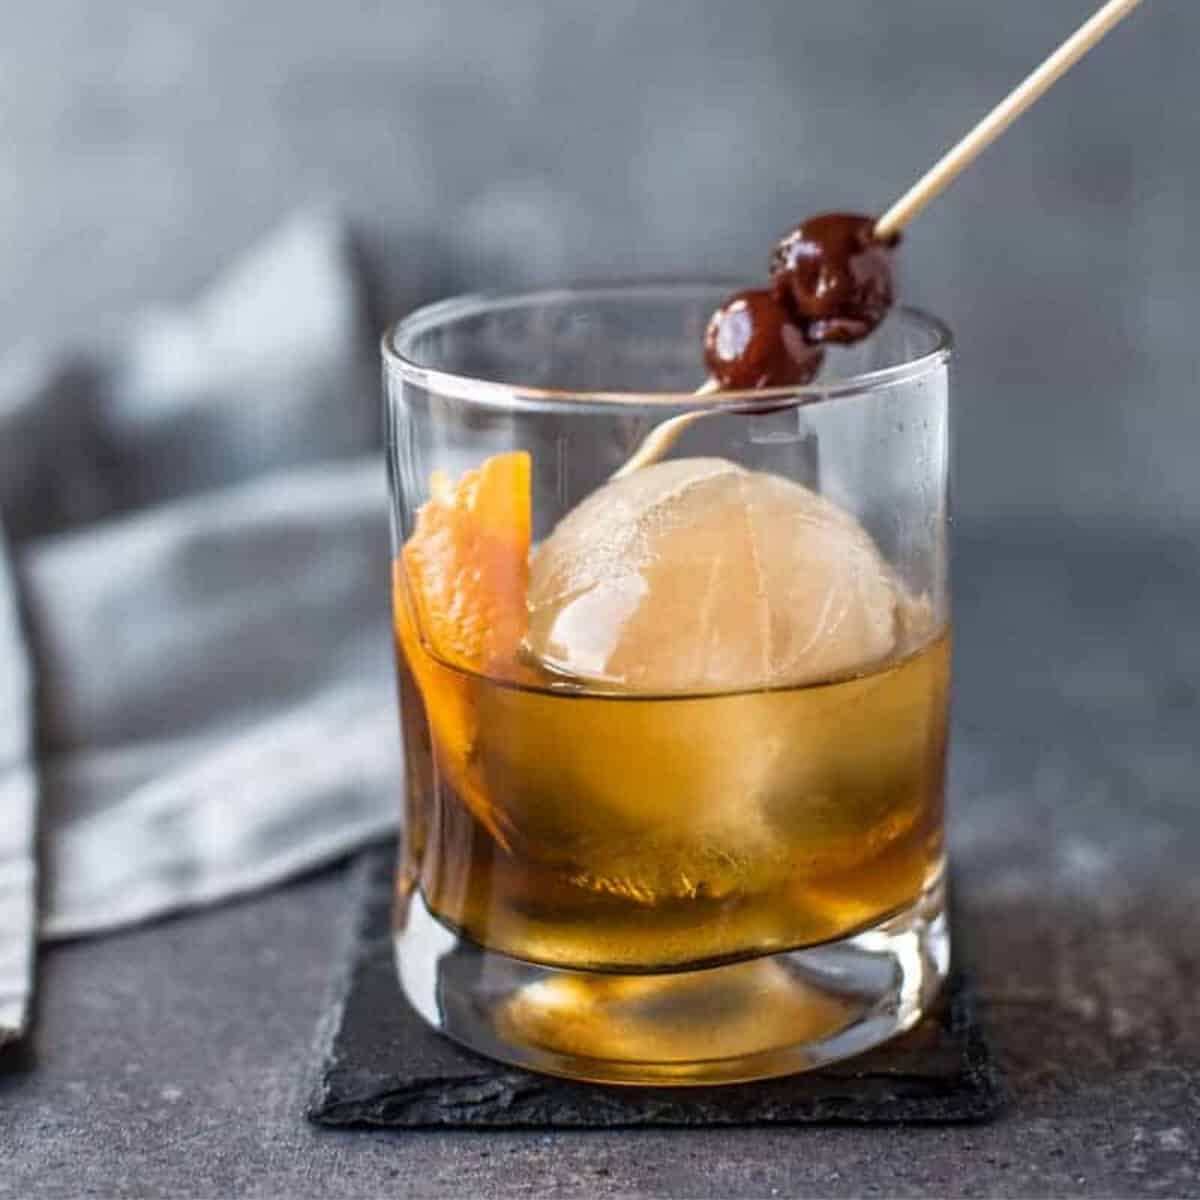 Better ice for better cocktails